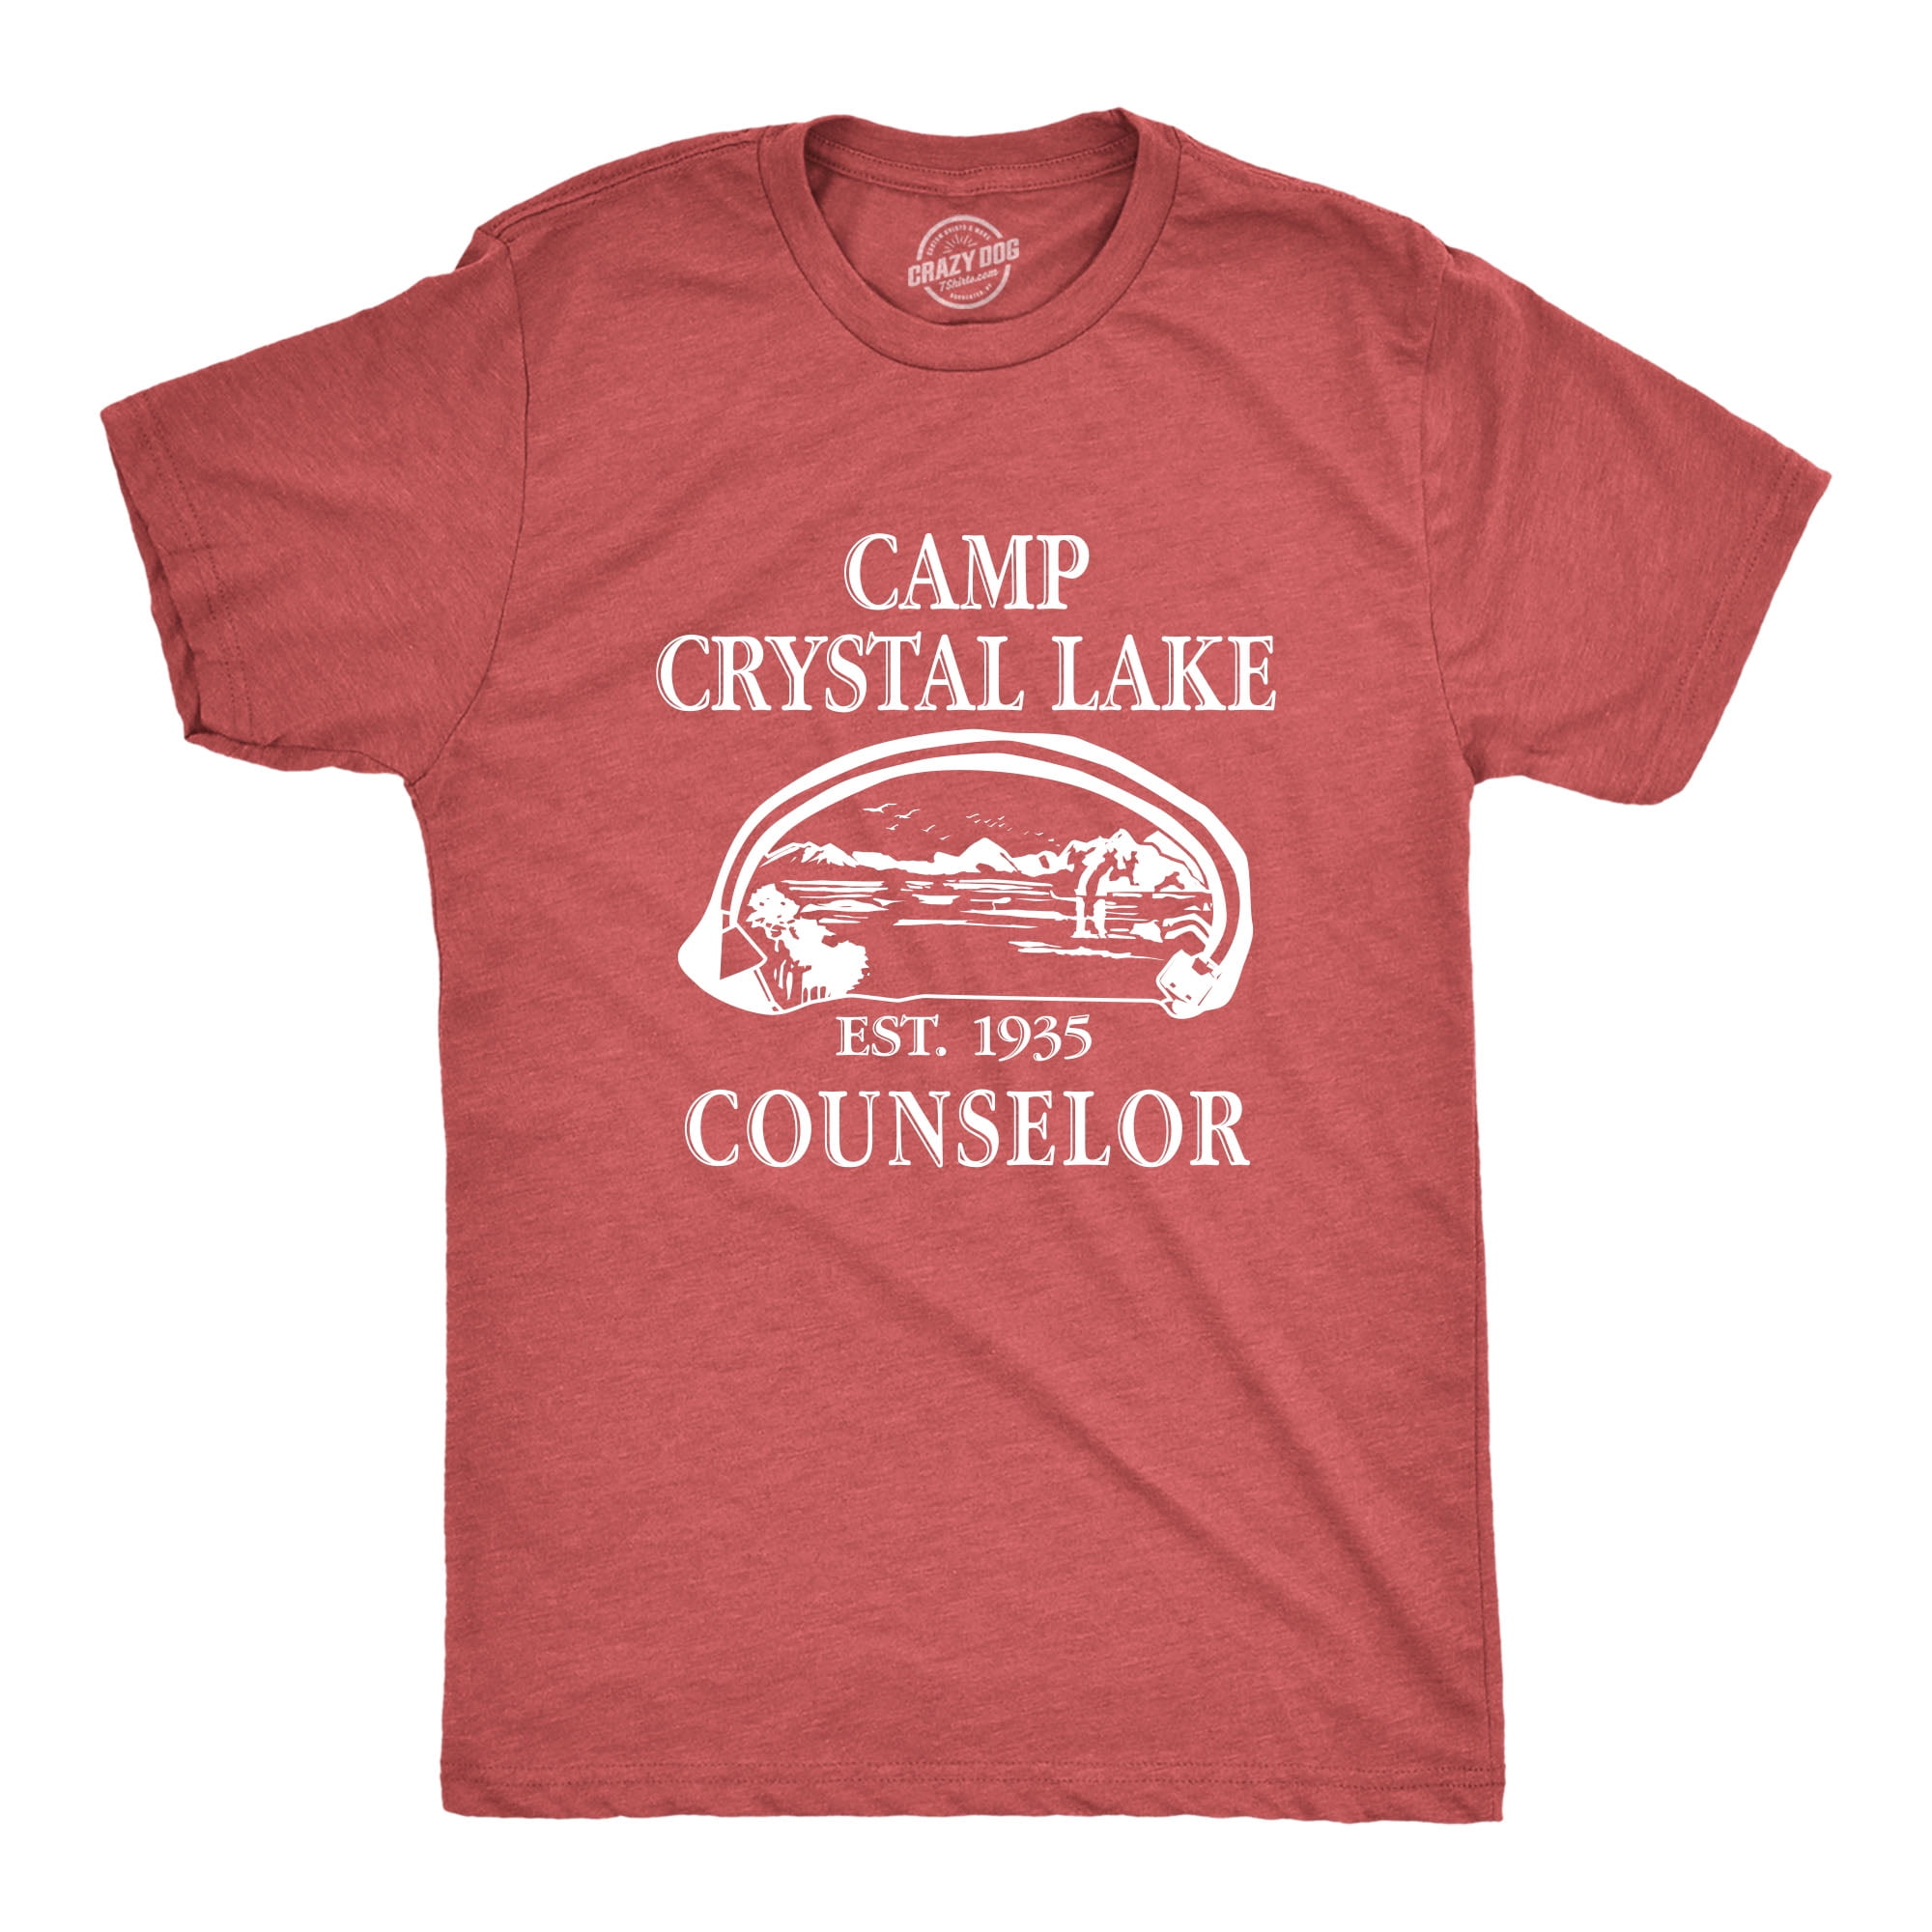 Mens Camp Crystal Lake T shirt Funny Graphic Camping Vintage Adult